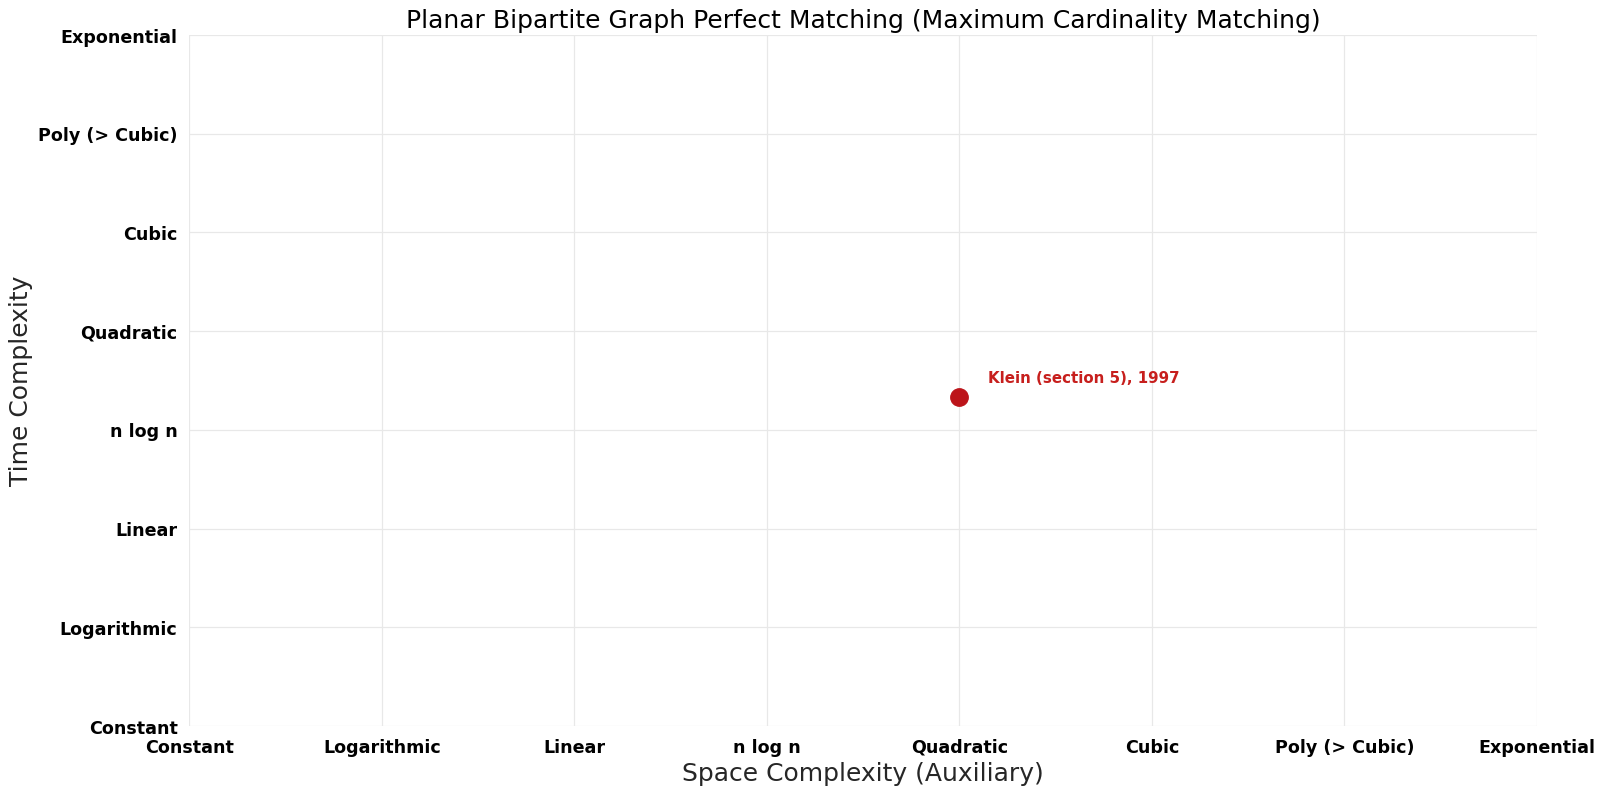 Maximum Cardinality Matching - Planar Bipartite Graph Perfect Matching - Pareto Frontier.png